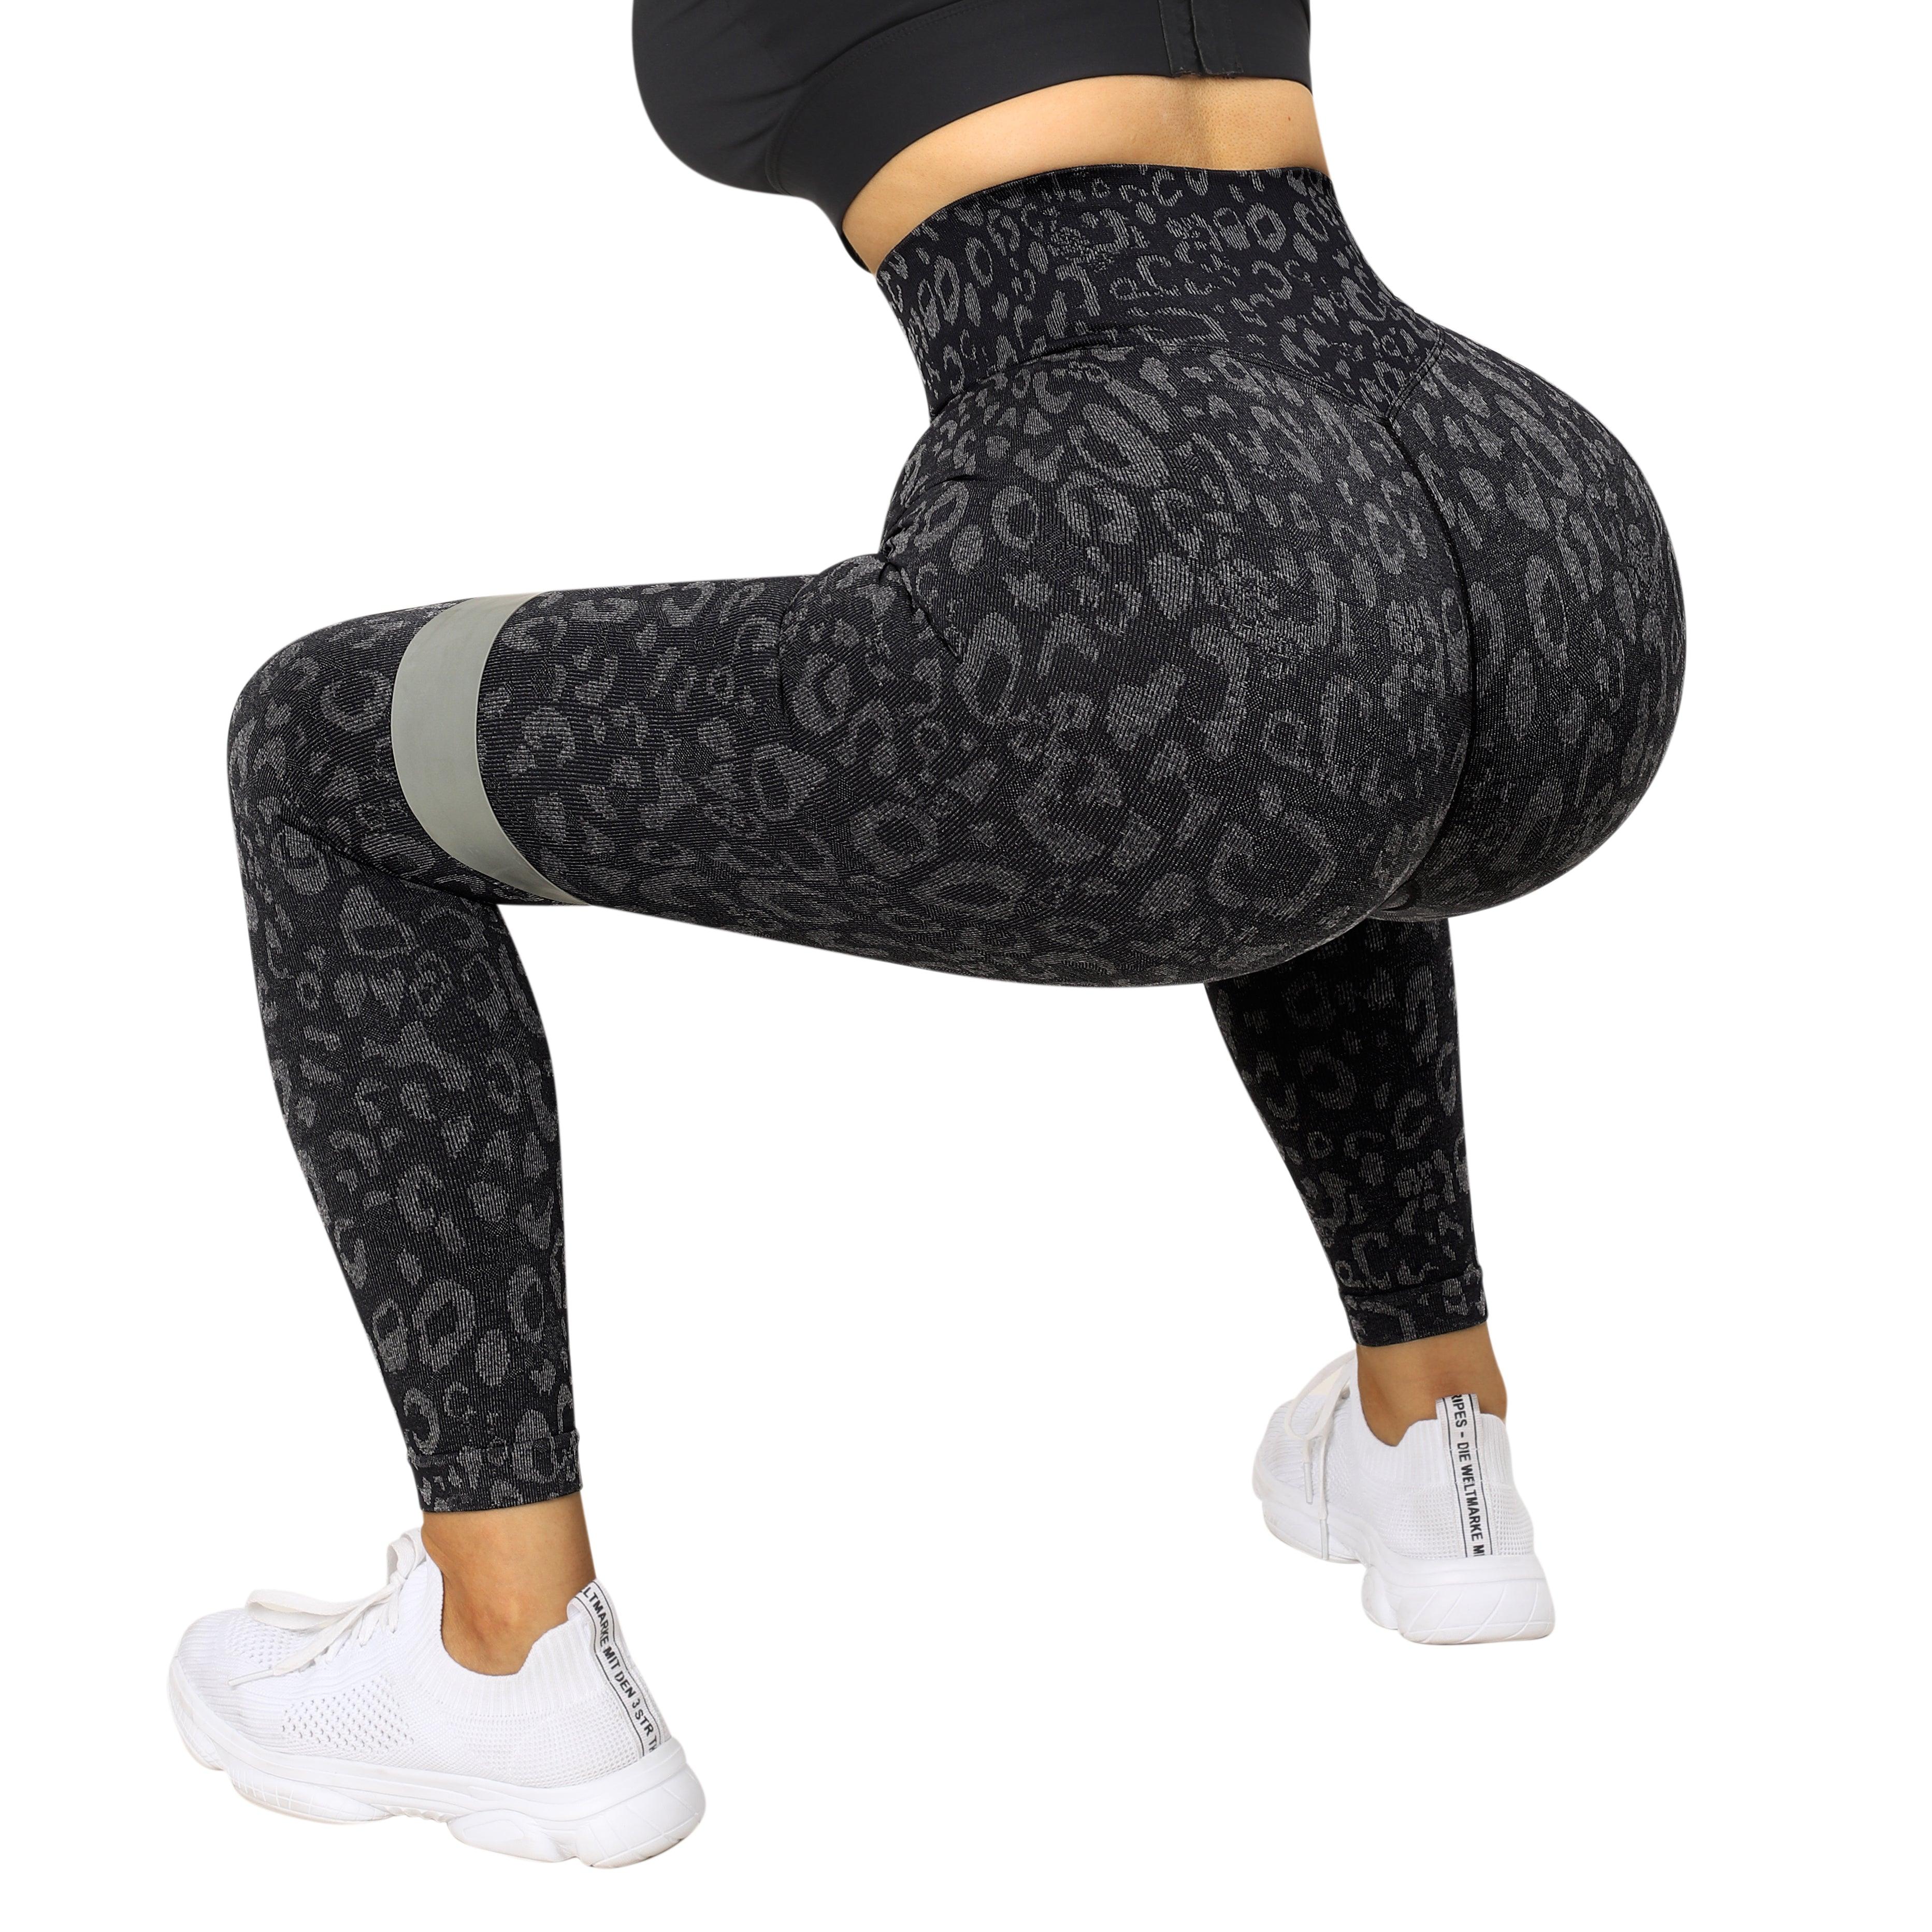 Gymshark Fit Seamless Workout Gym Leggings Grey Size M / L